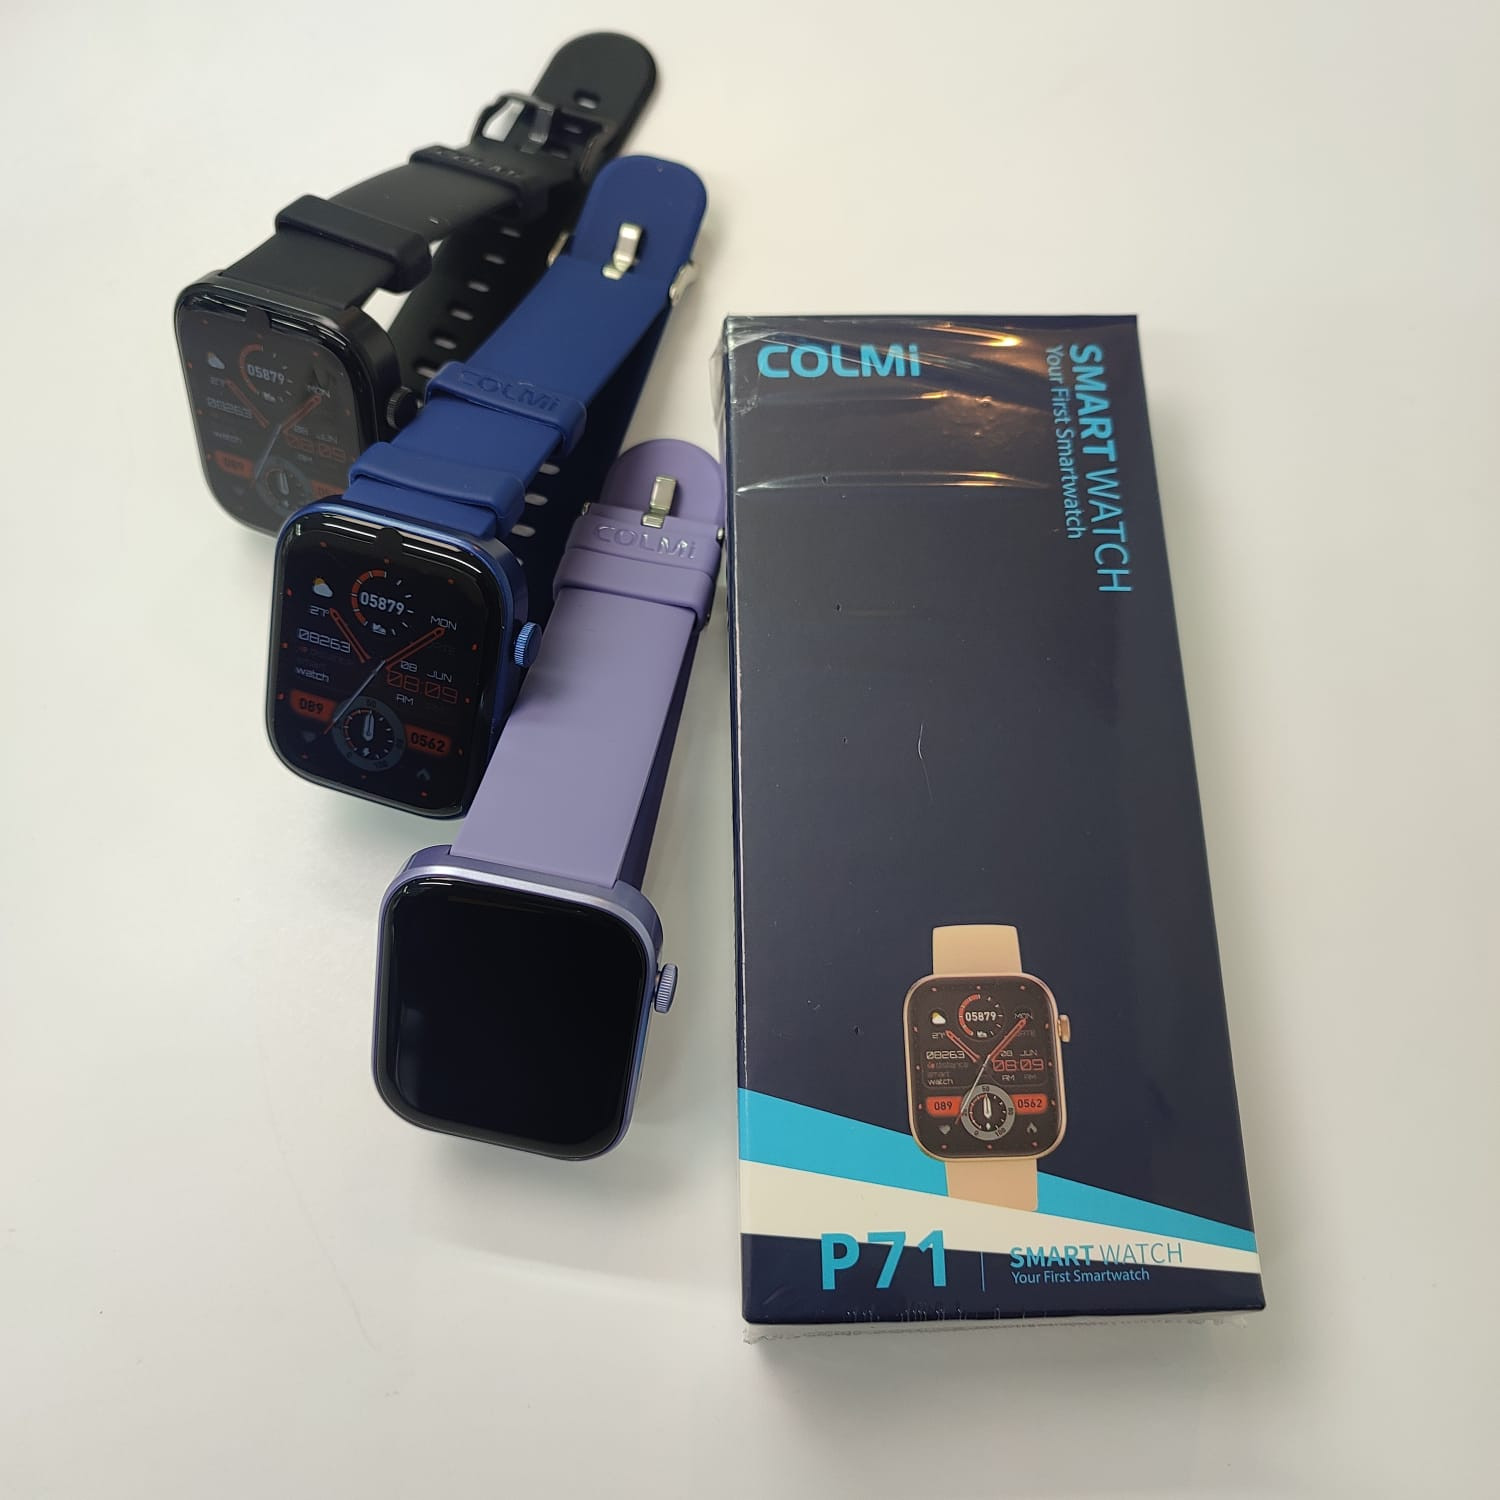 Colmi P71 Smartwatch Unisex